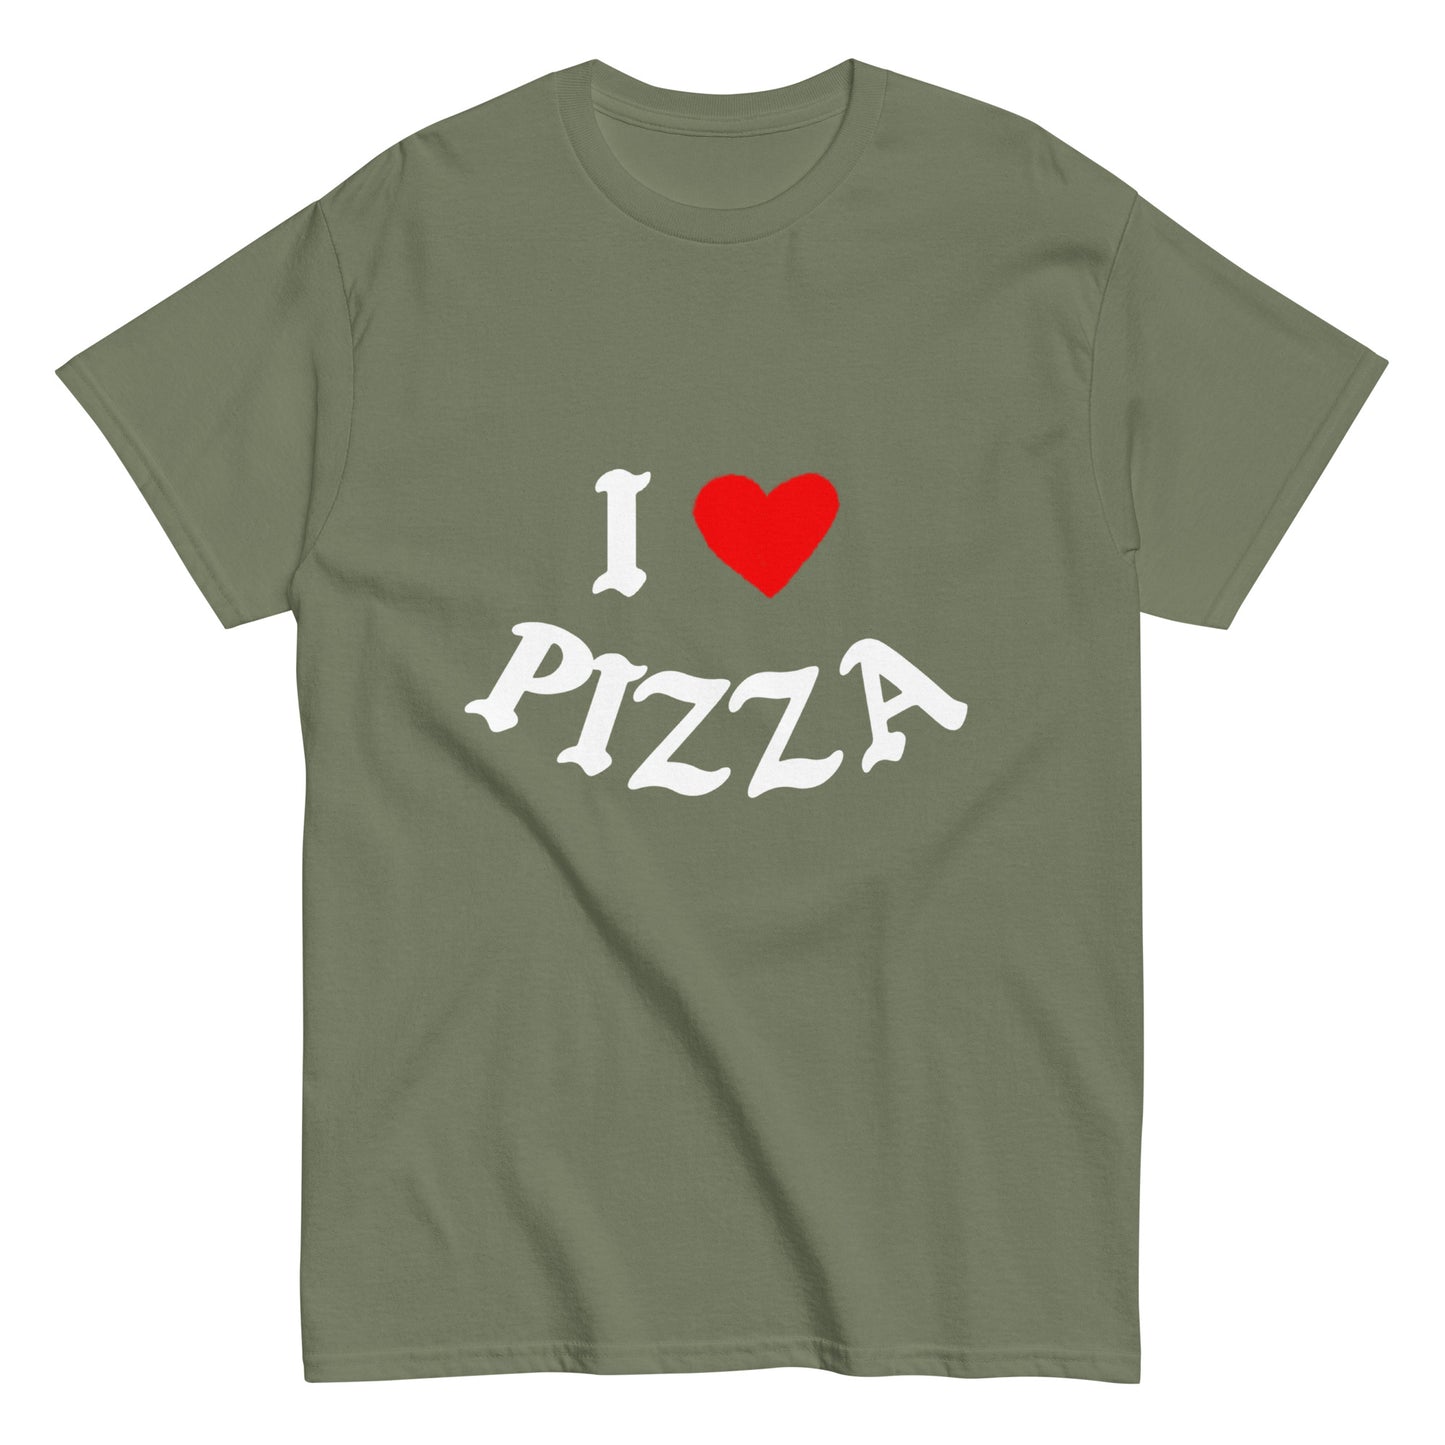 I love pizza t-shirt